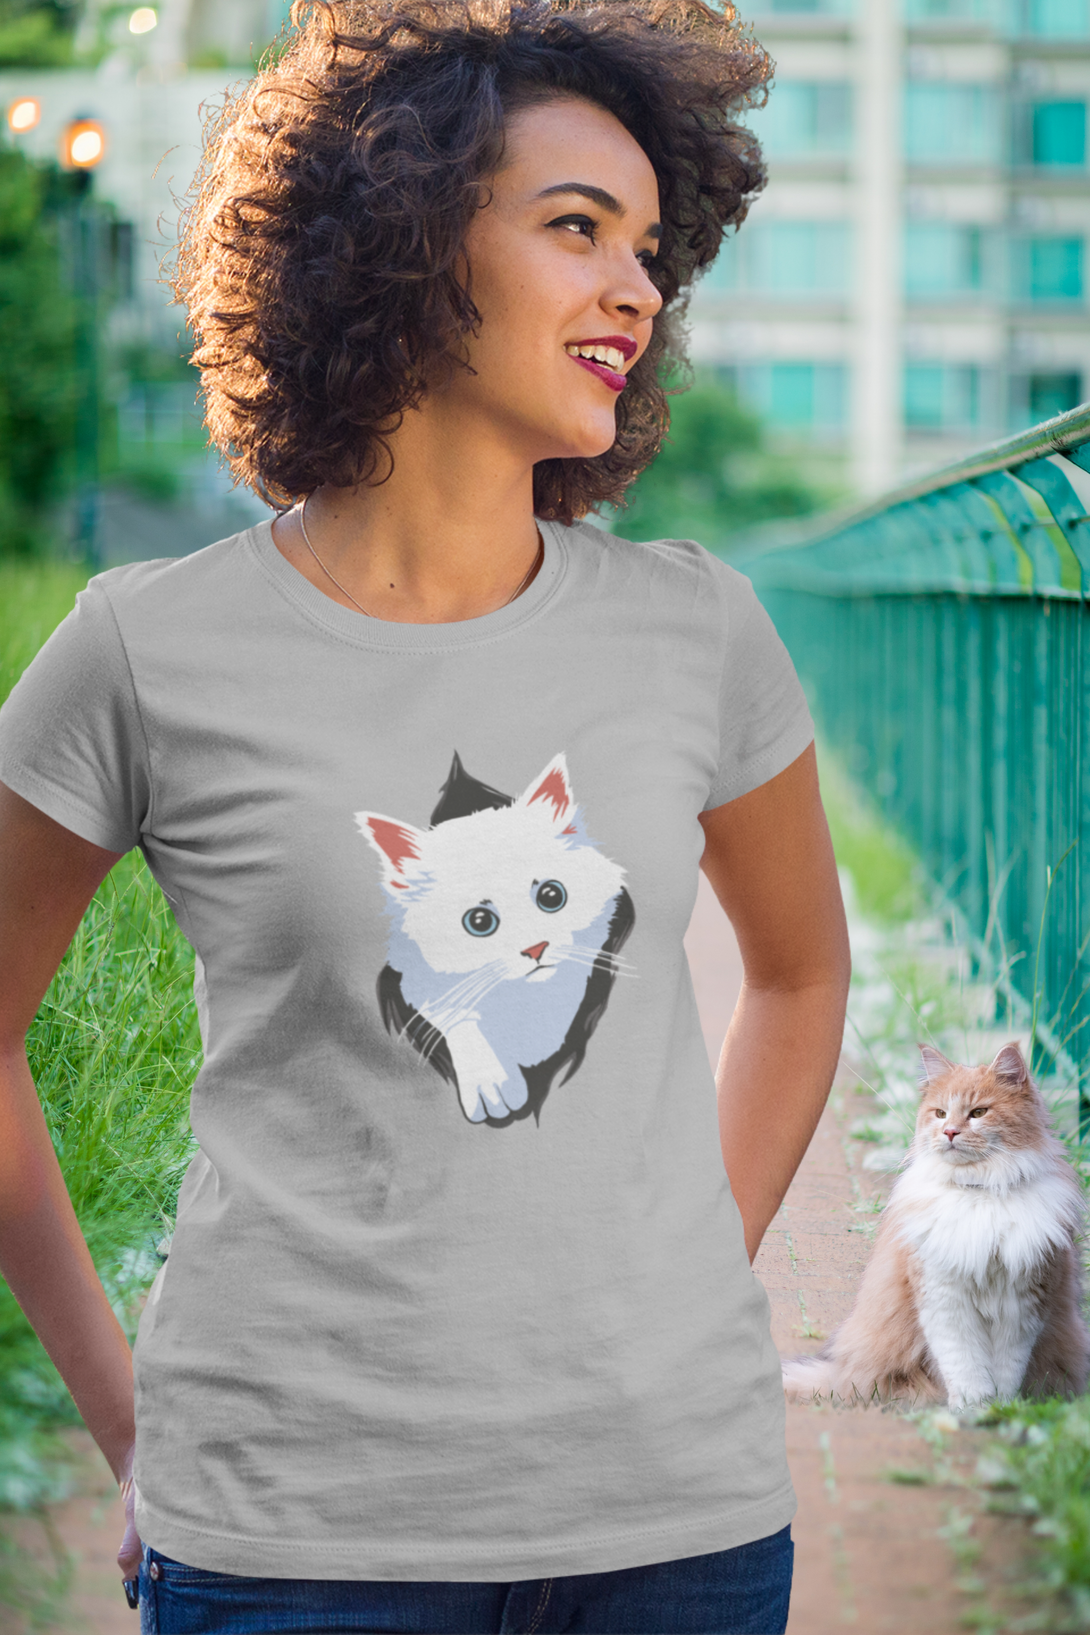 White Cat Printed T-Shirt For Women - WowWaves - 3